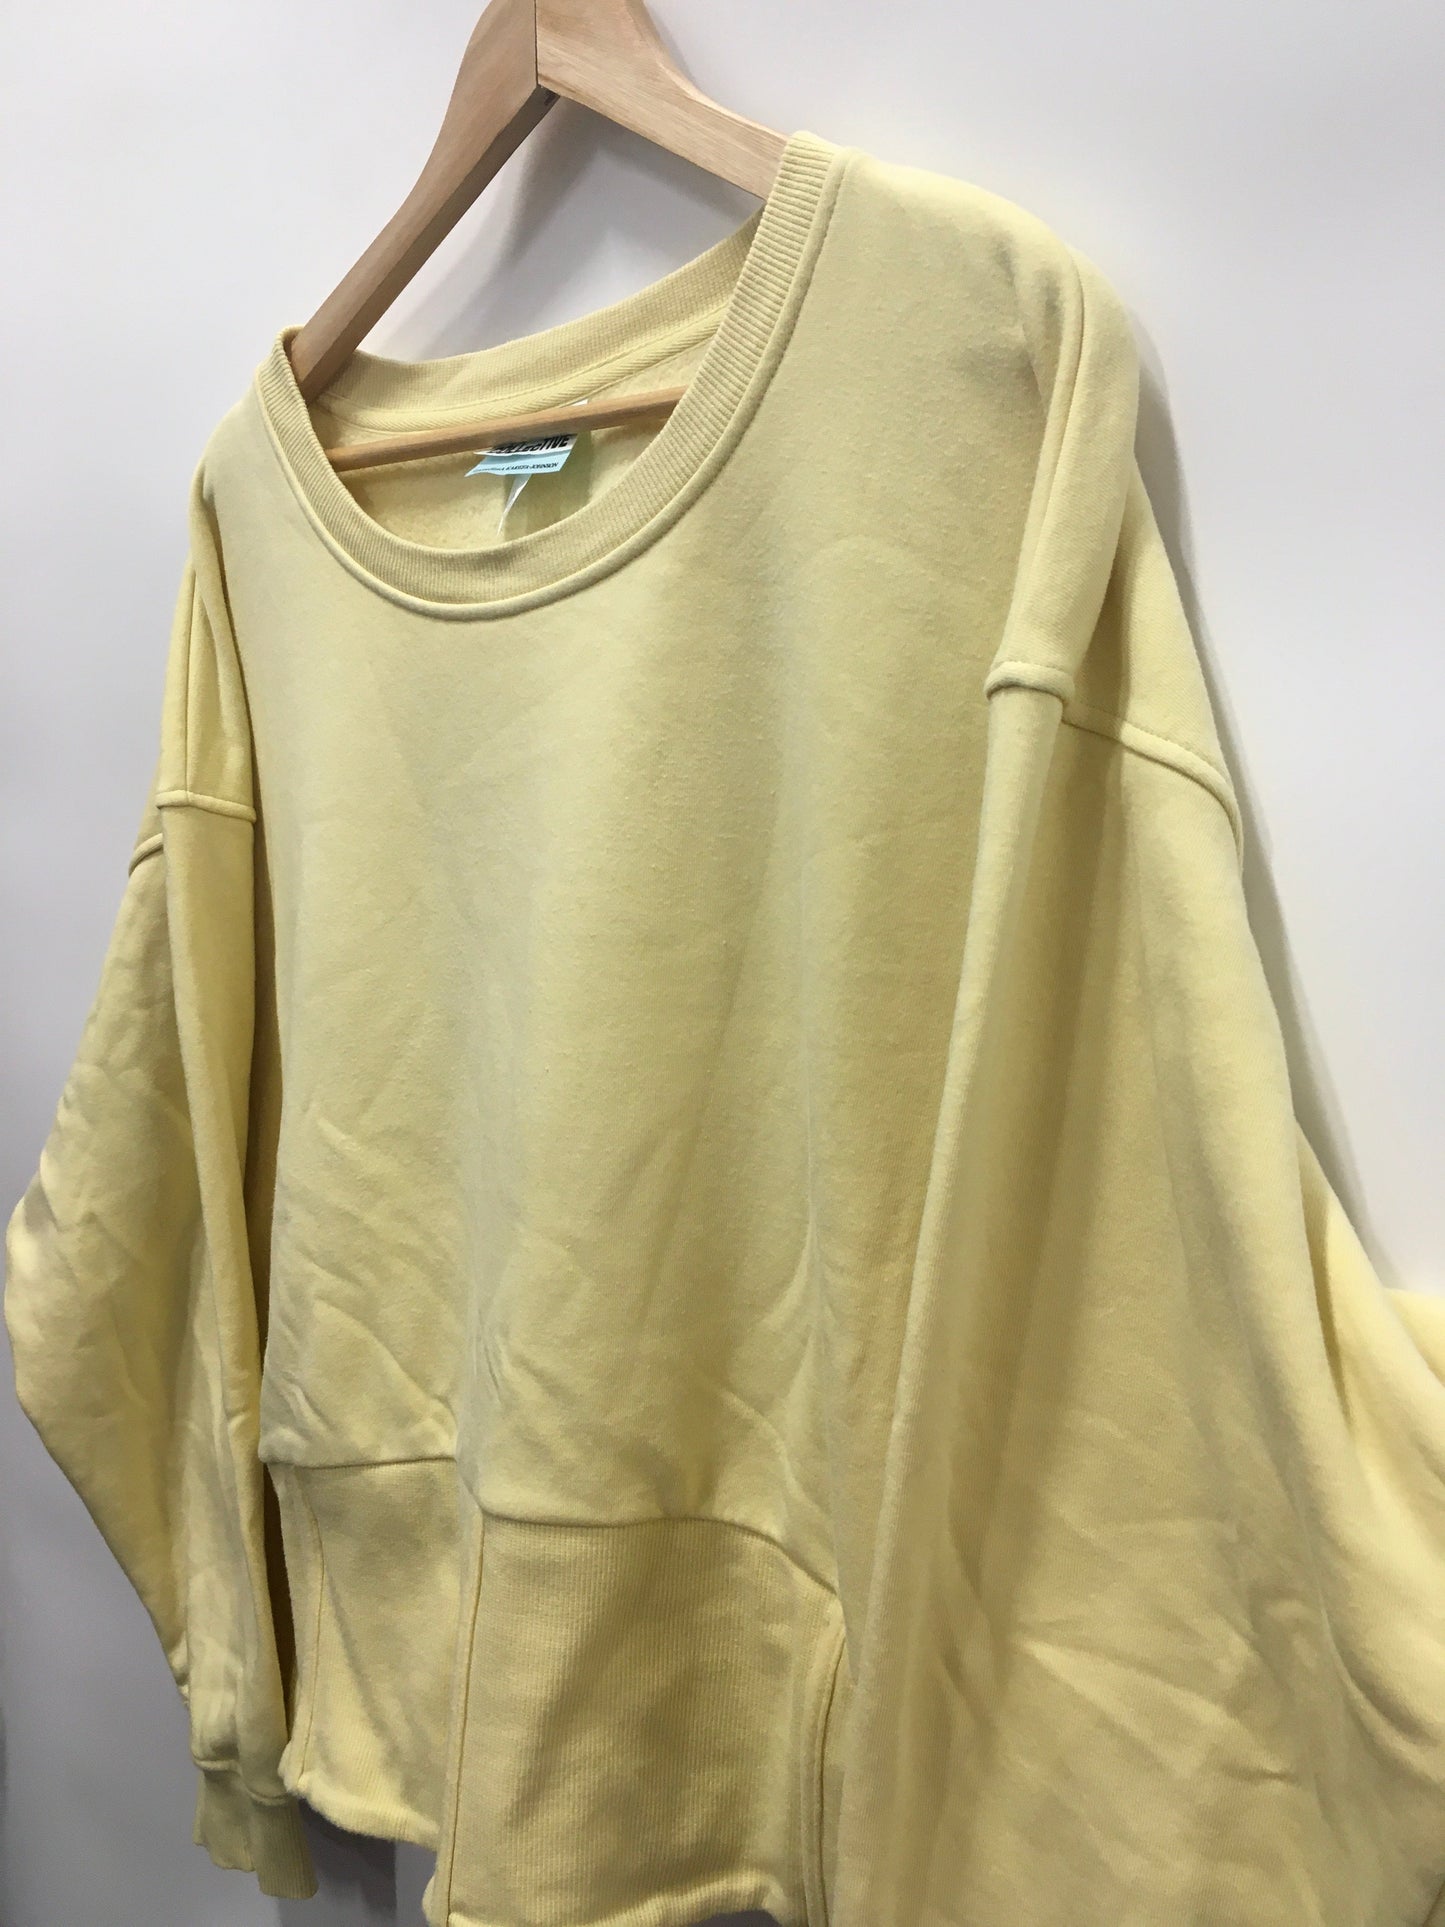 Sweatshirt Crewneck By Clothes Mentor  Size: 3x